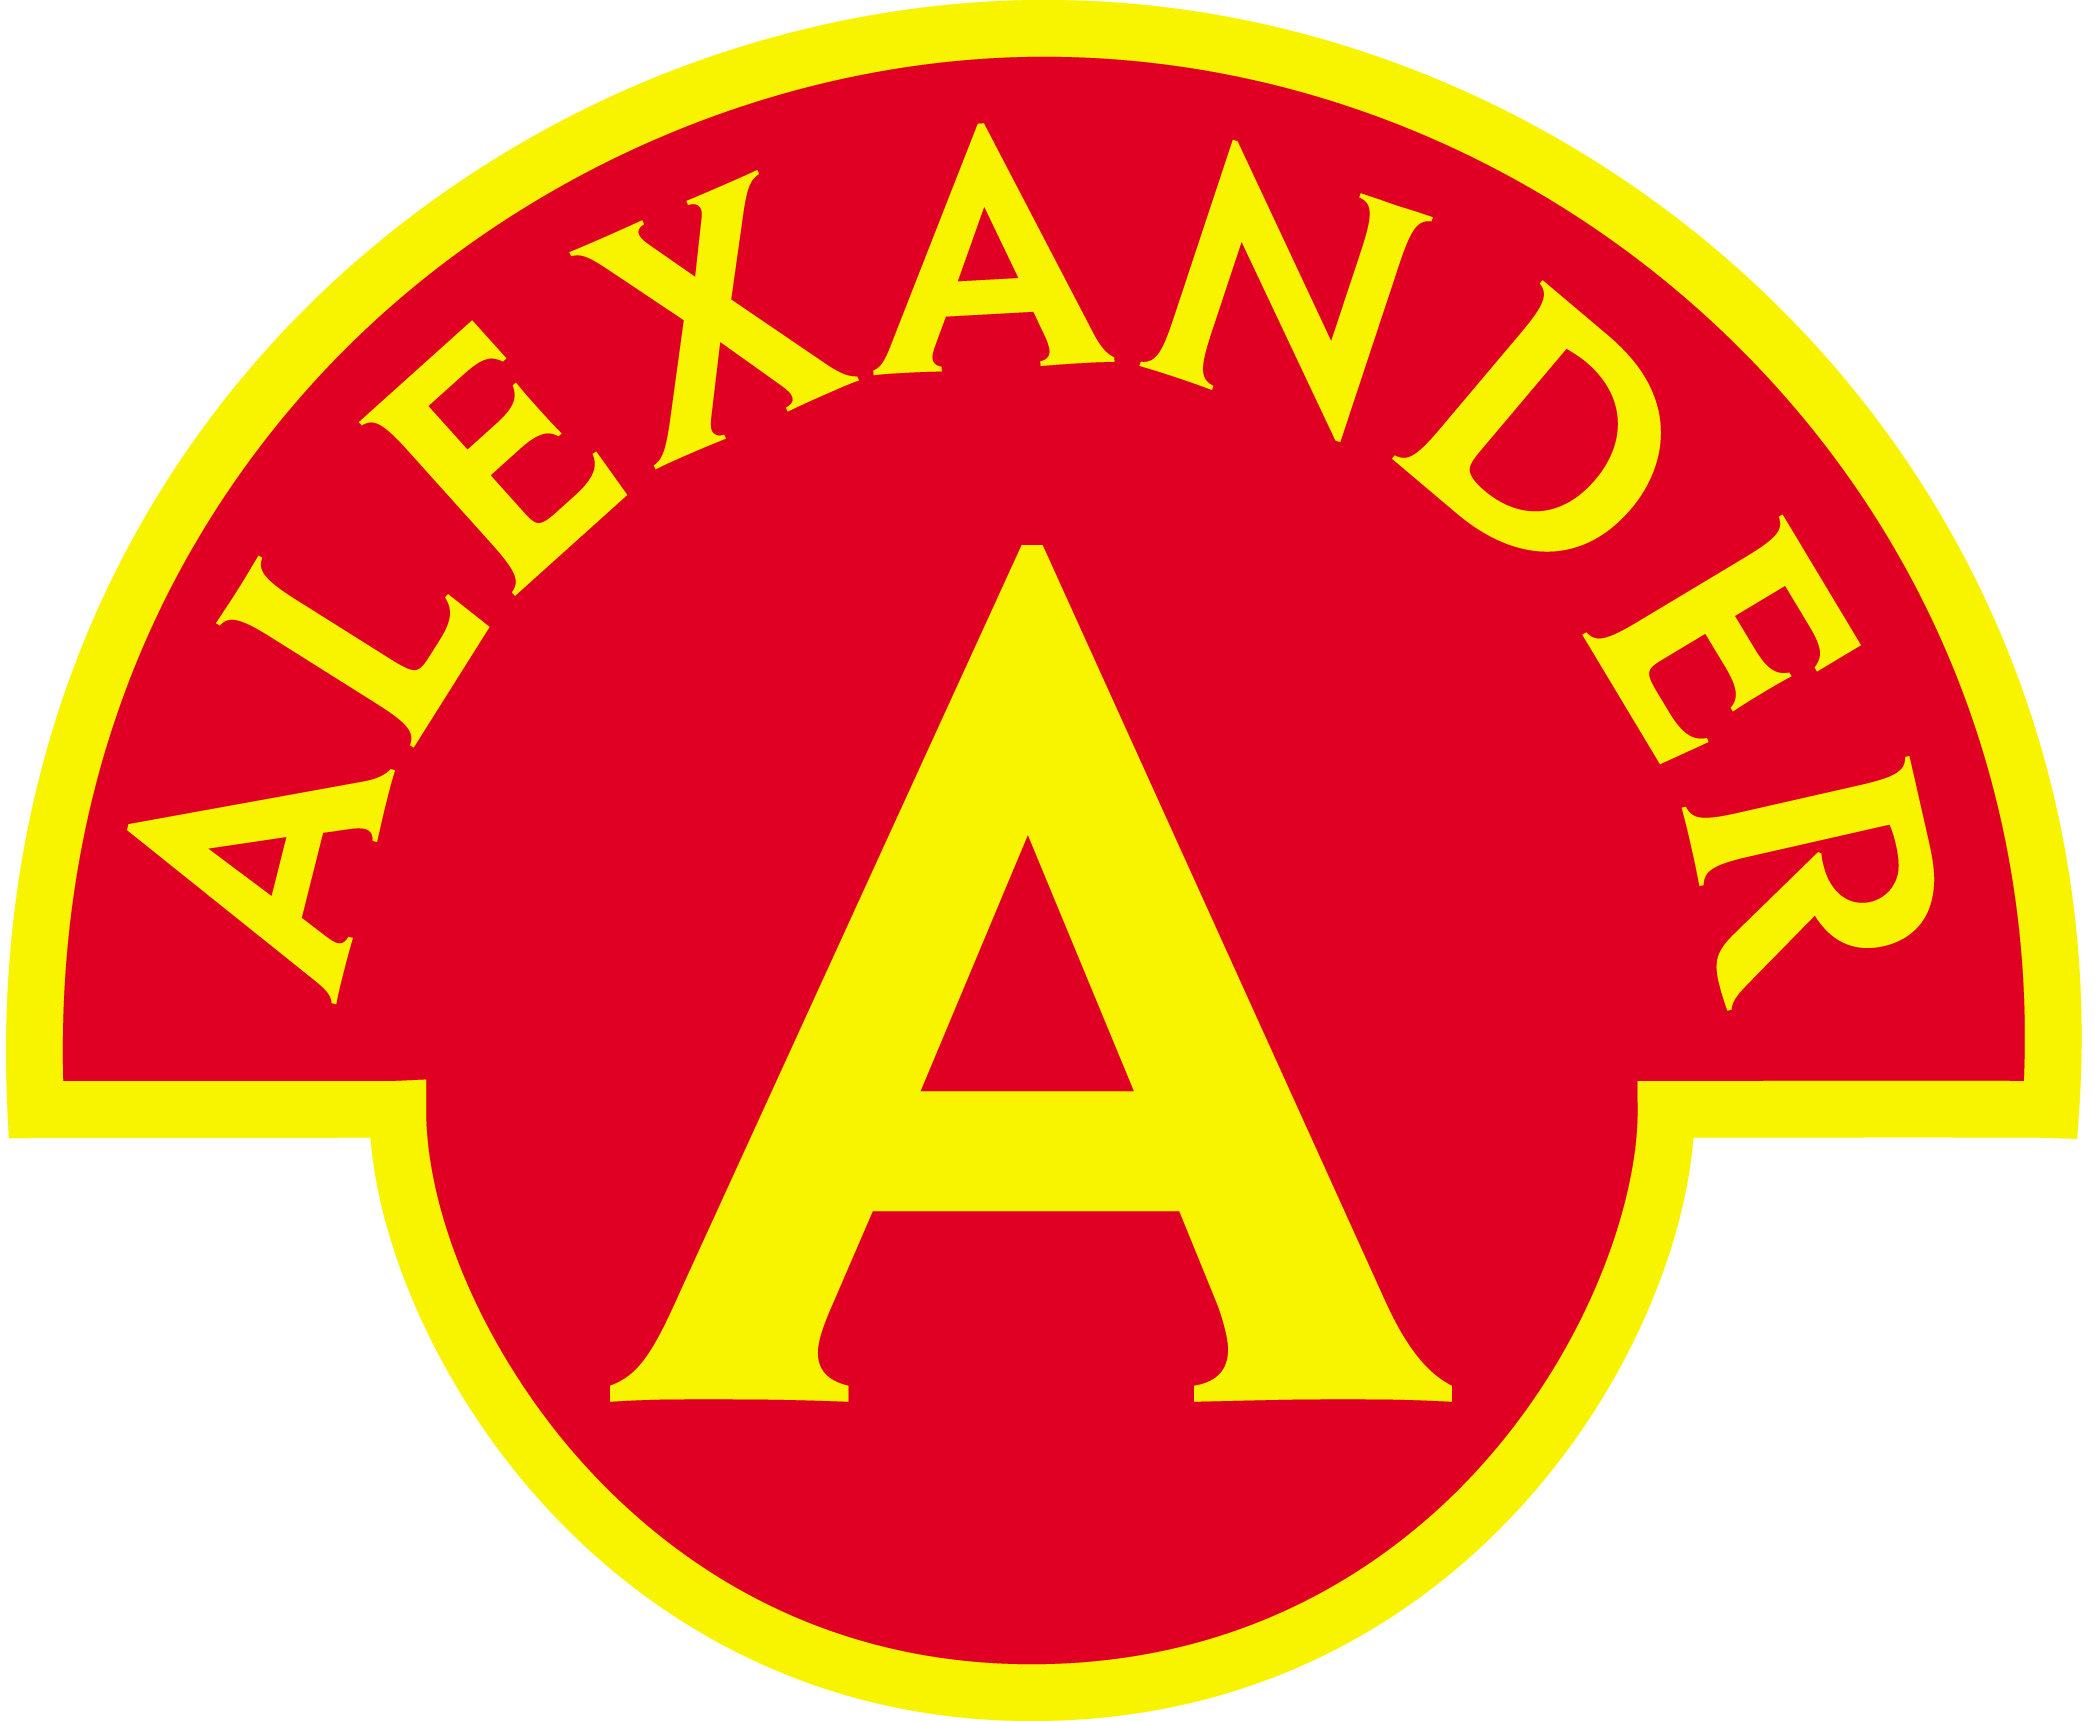 Alexander formaty logo 1